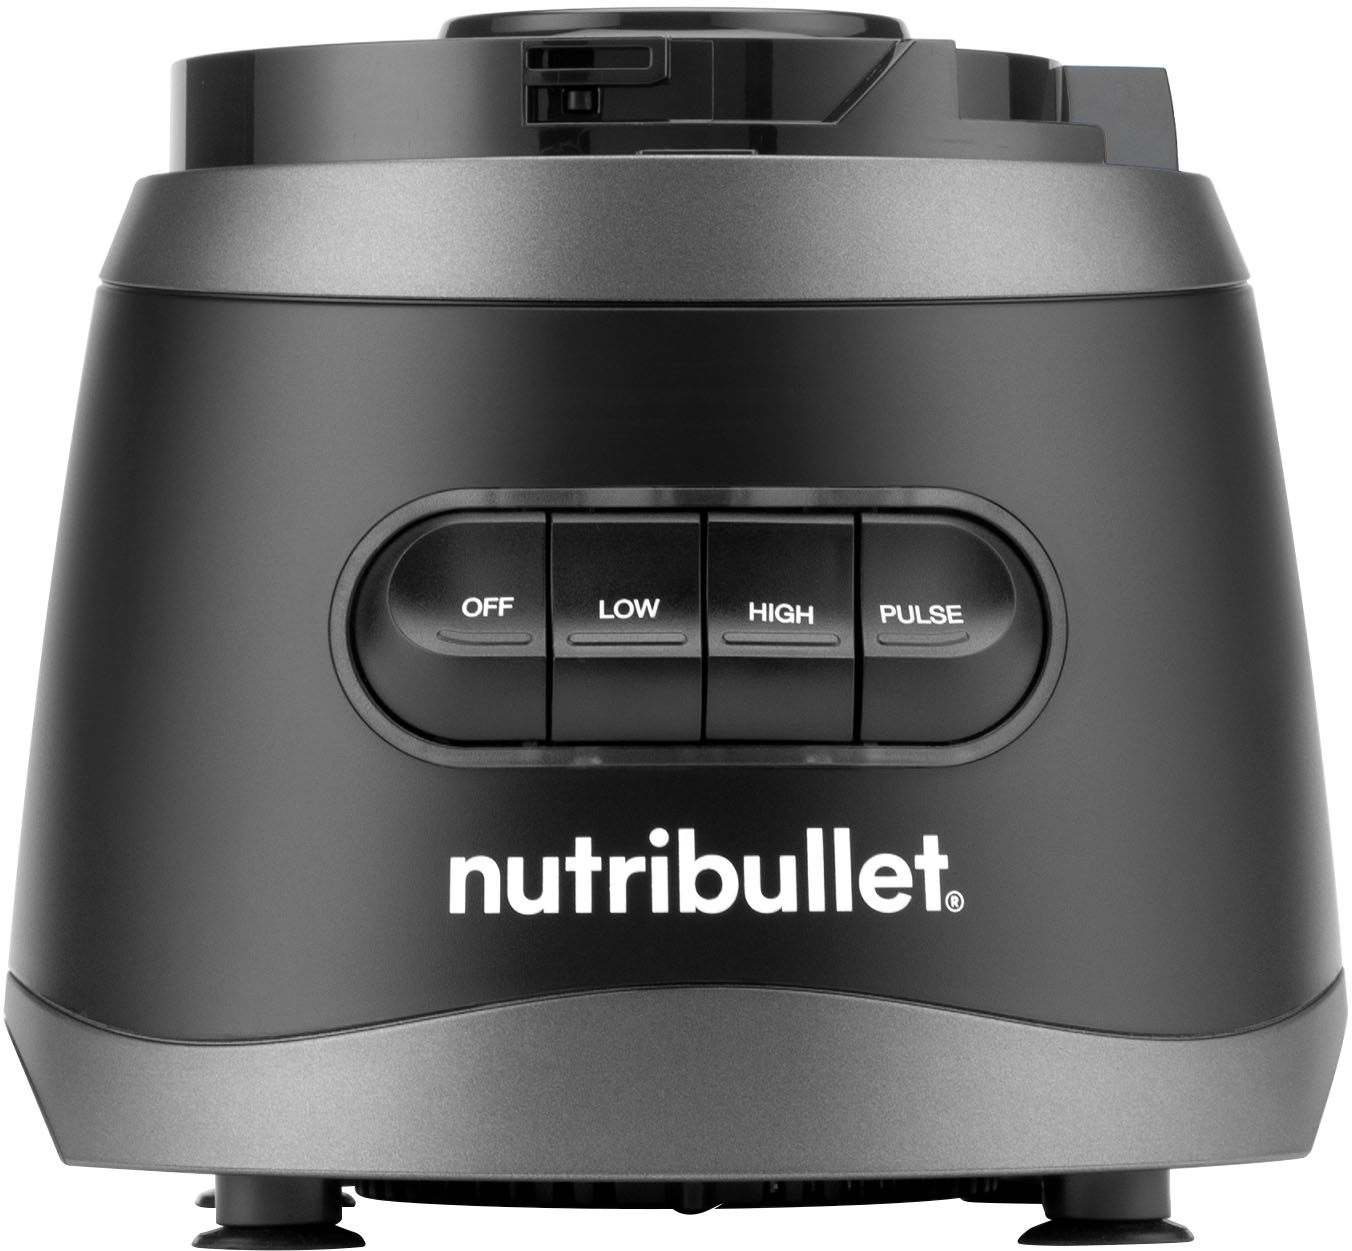 Nutribullet 7-Cup Food Processor - 450W Motor - 3-Speed